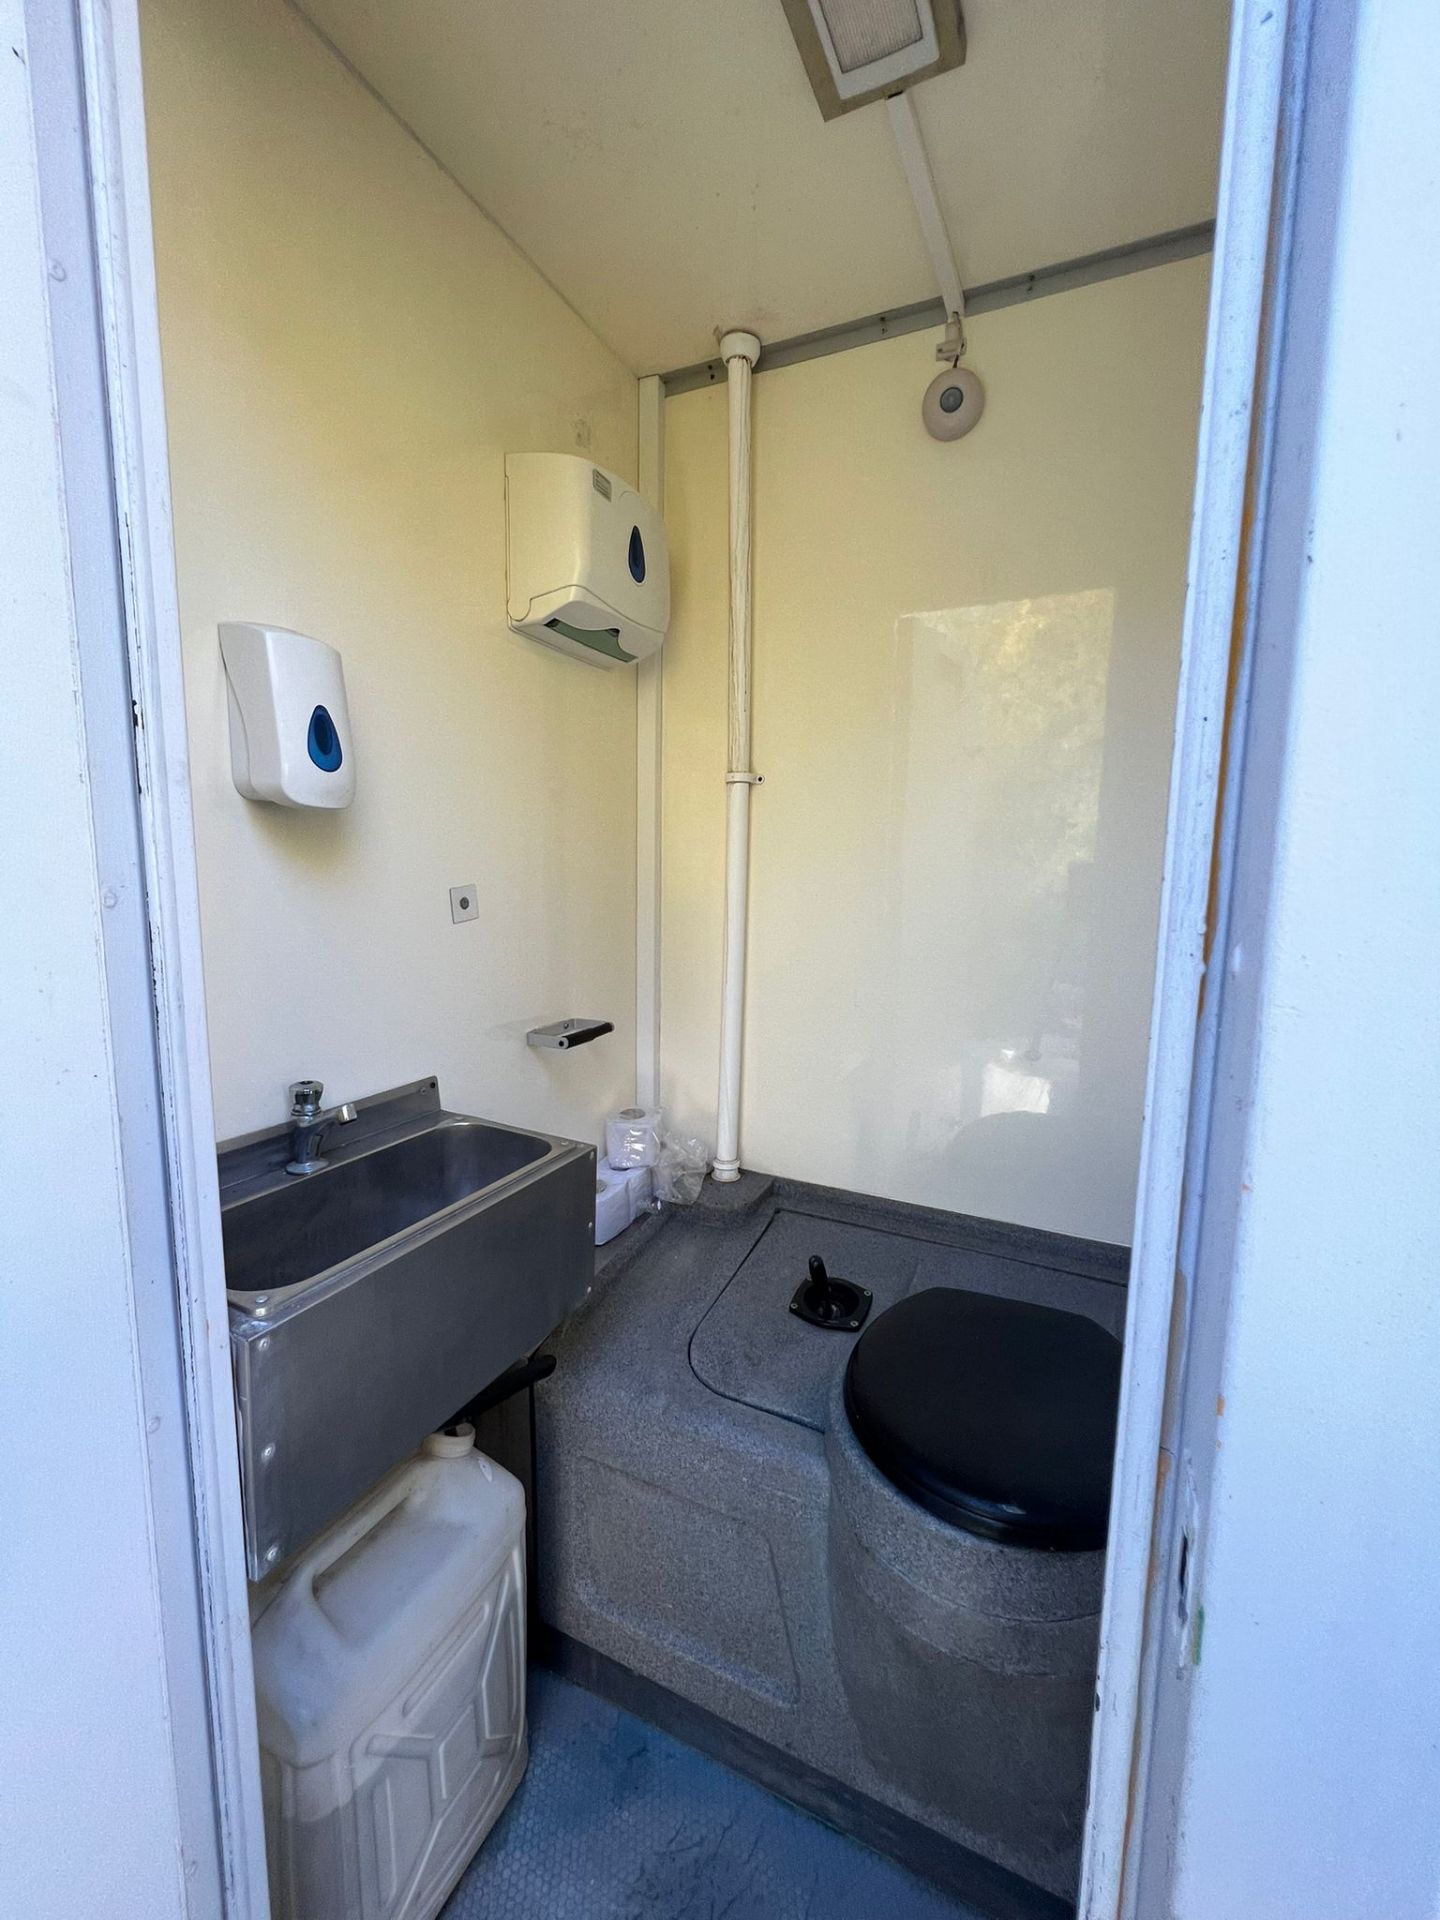 AJC towable welfare unit cabin - Image 5 of 9